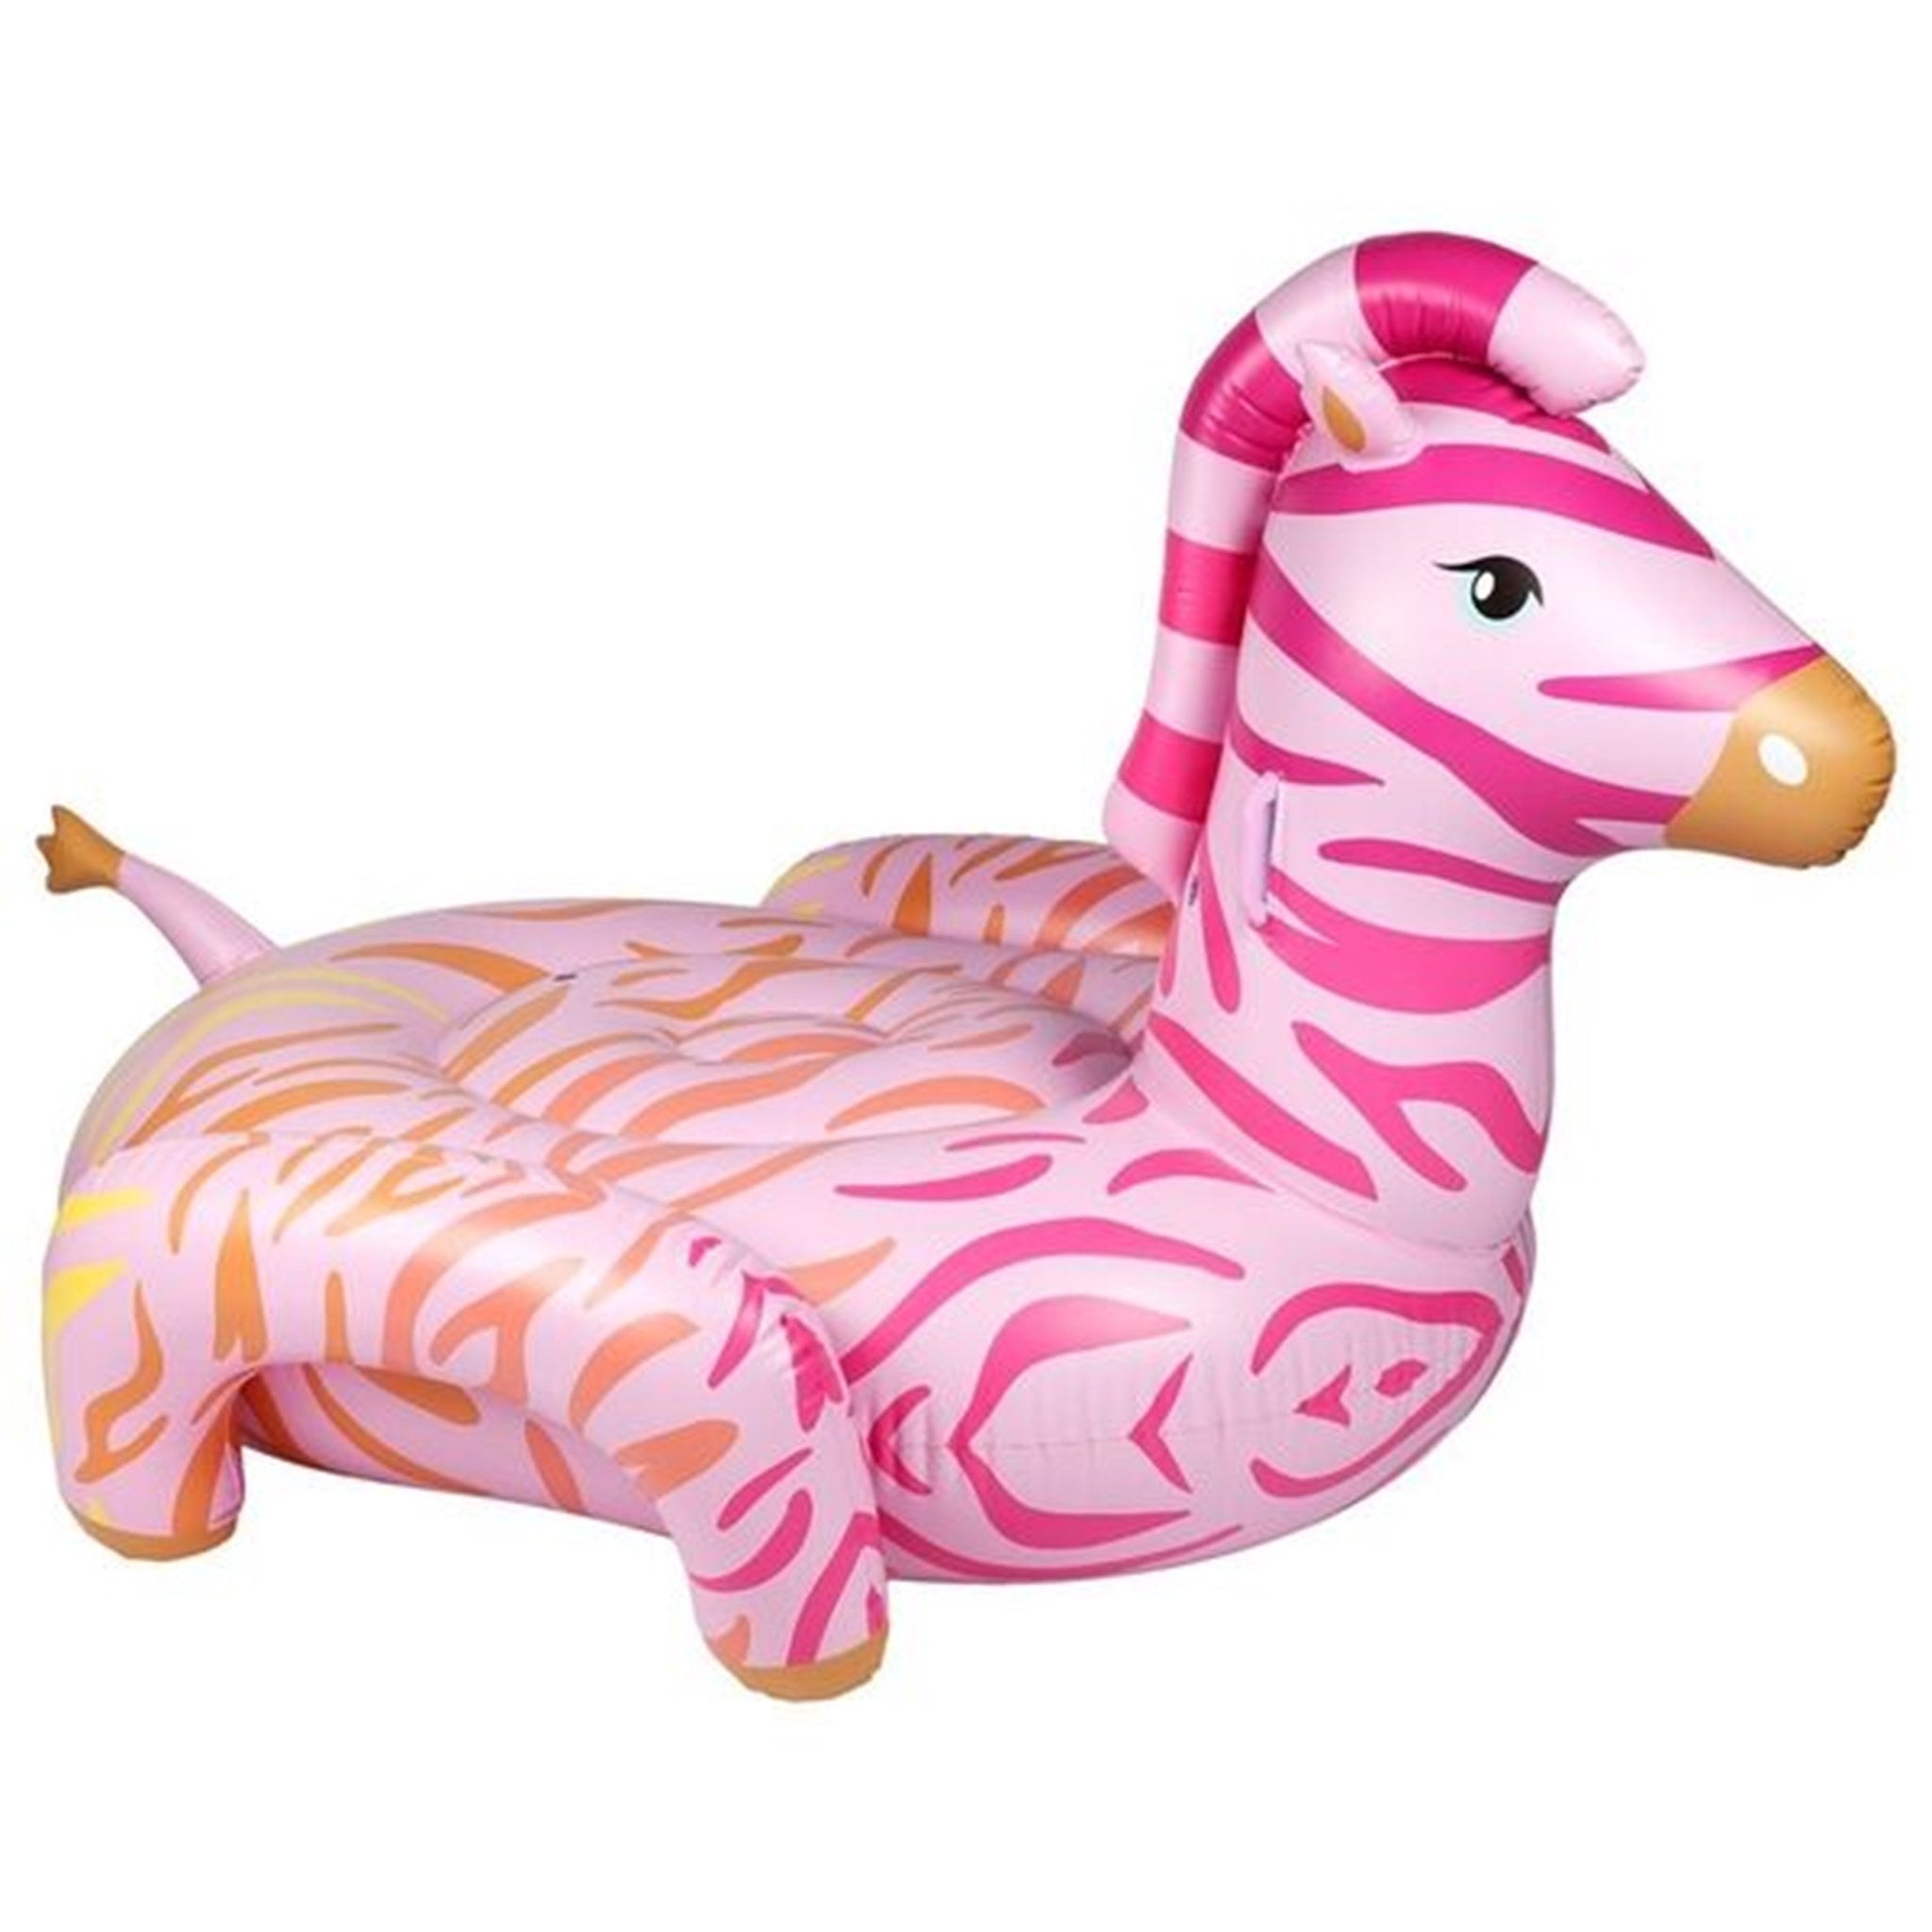 SunnyLife Ride-On Float Zebra